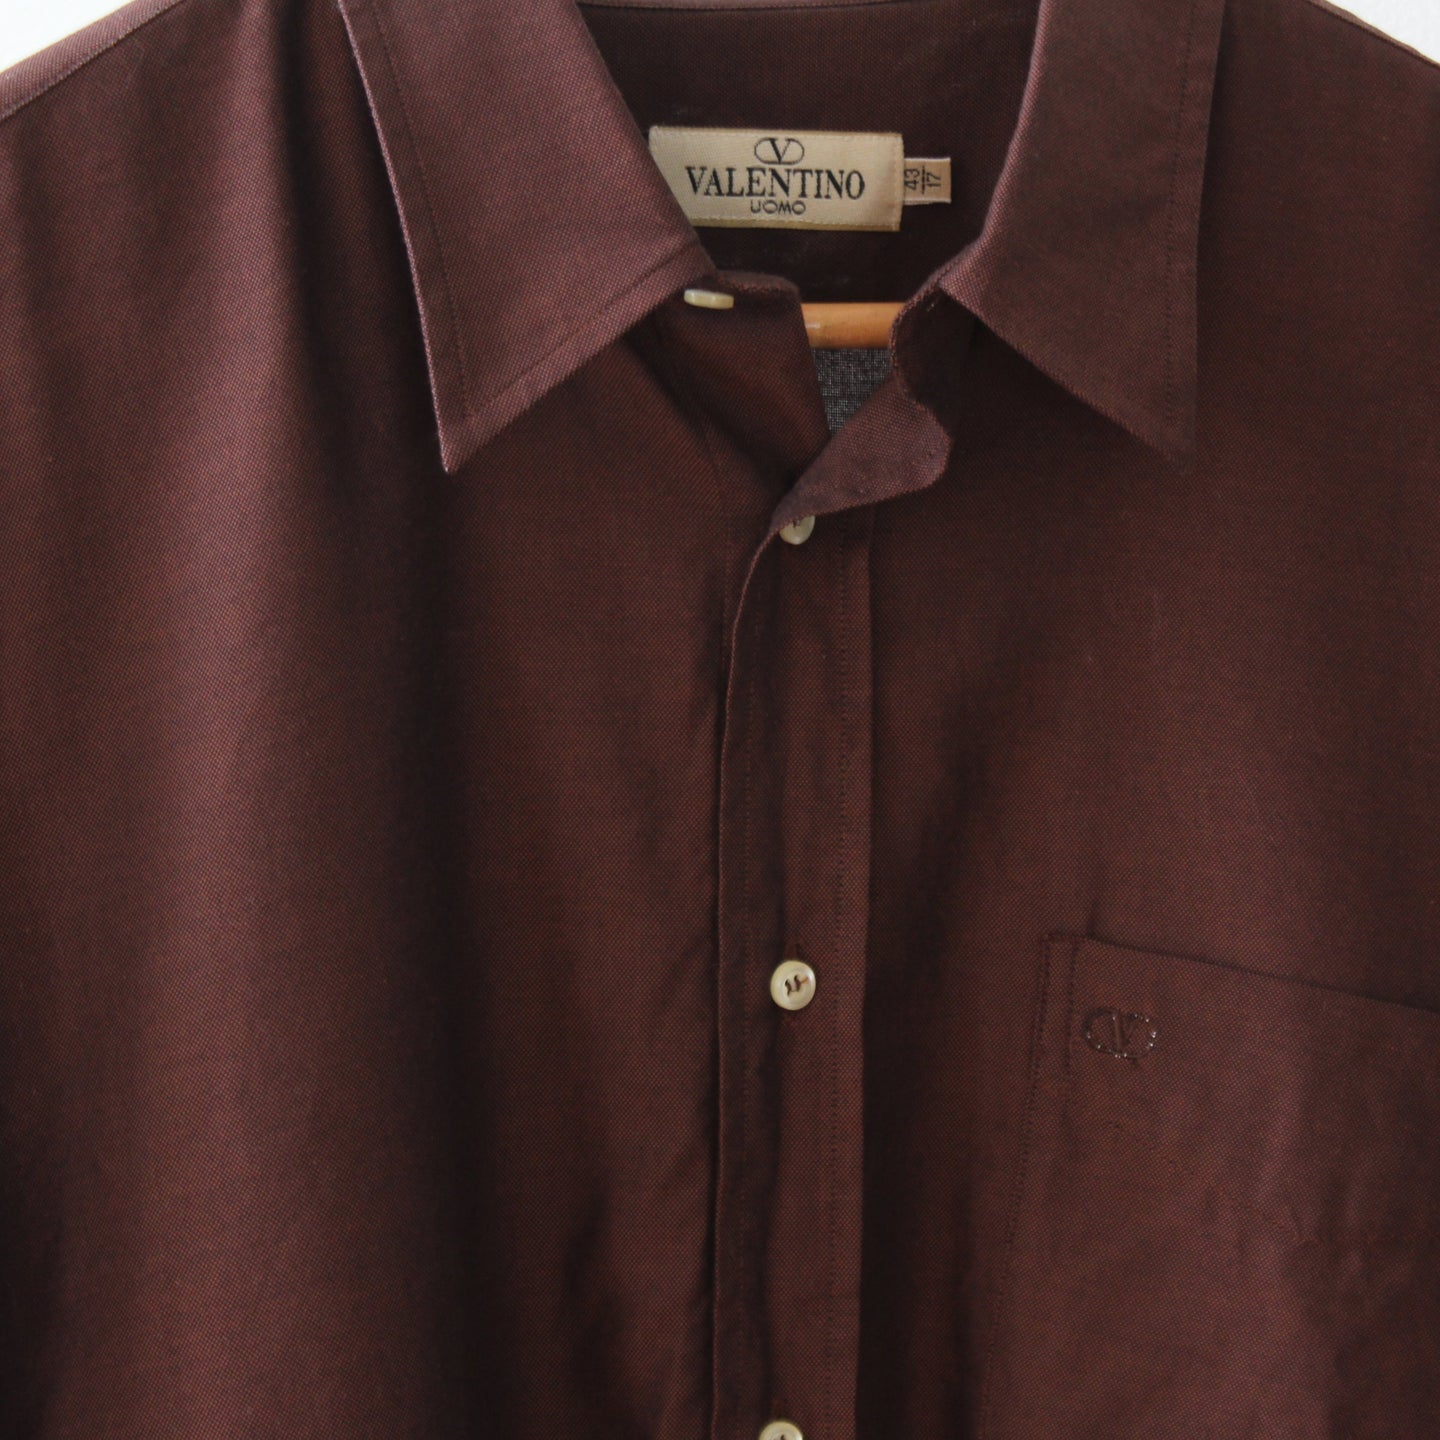 Valentino uomo 90's cotton brown shirt, size L